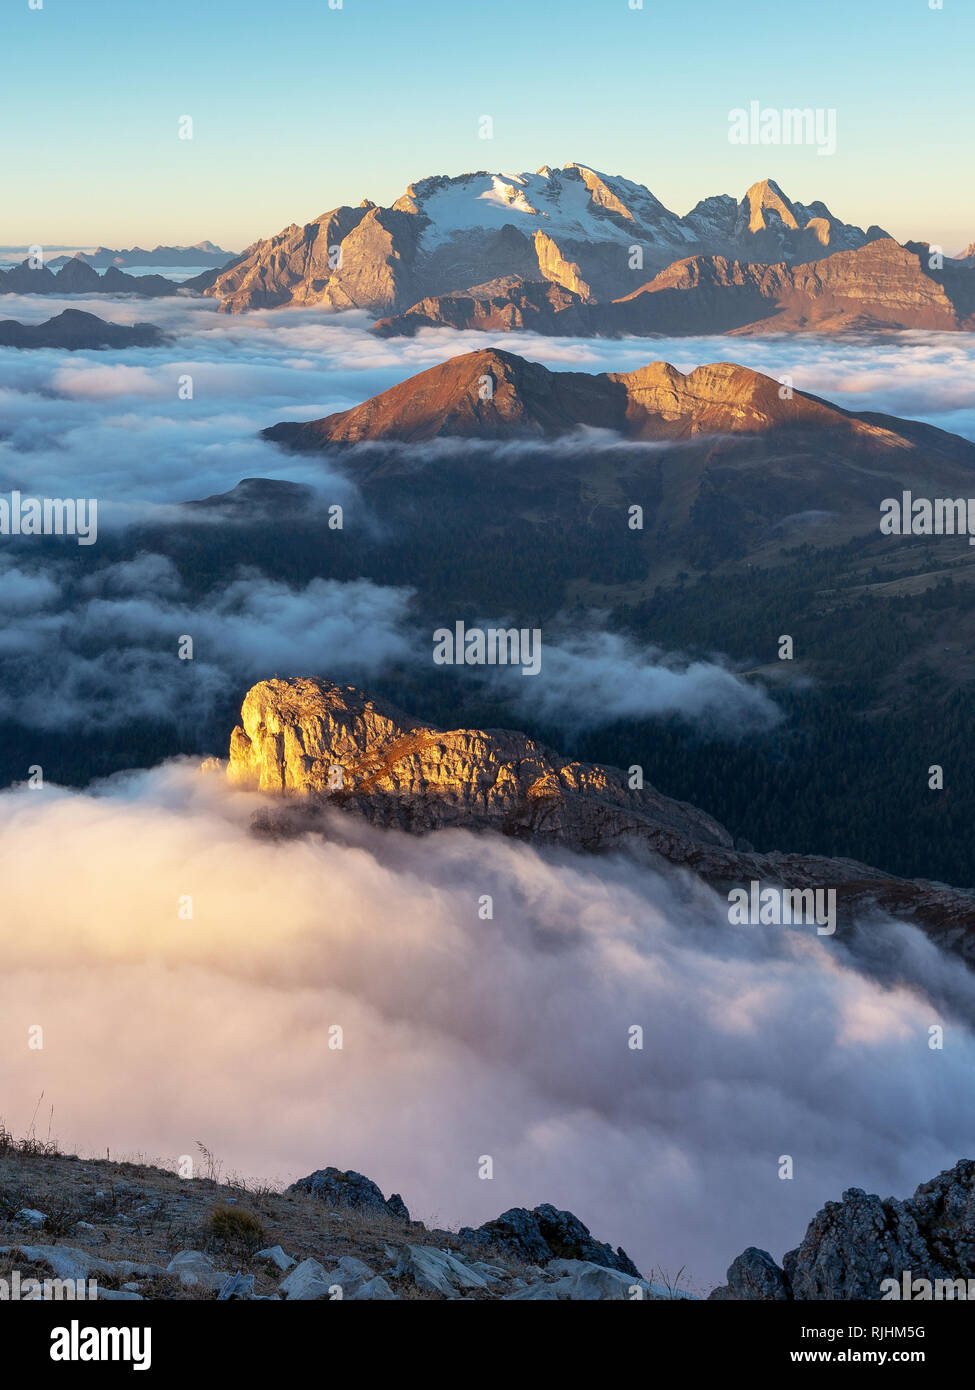 The Dolomites at sunrise, clouds and peaks: Sass de Stria, Col di Lana, Marmolada mountains. Italian Alps. Europe. Stock Photo